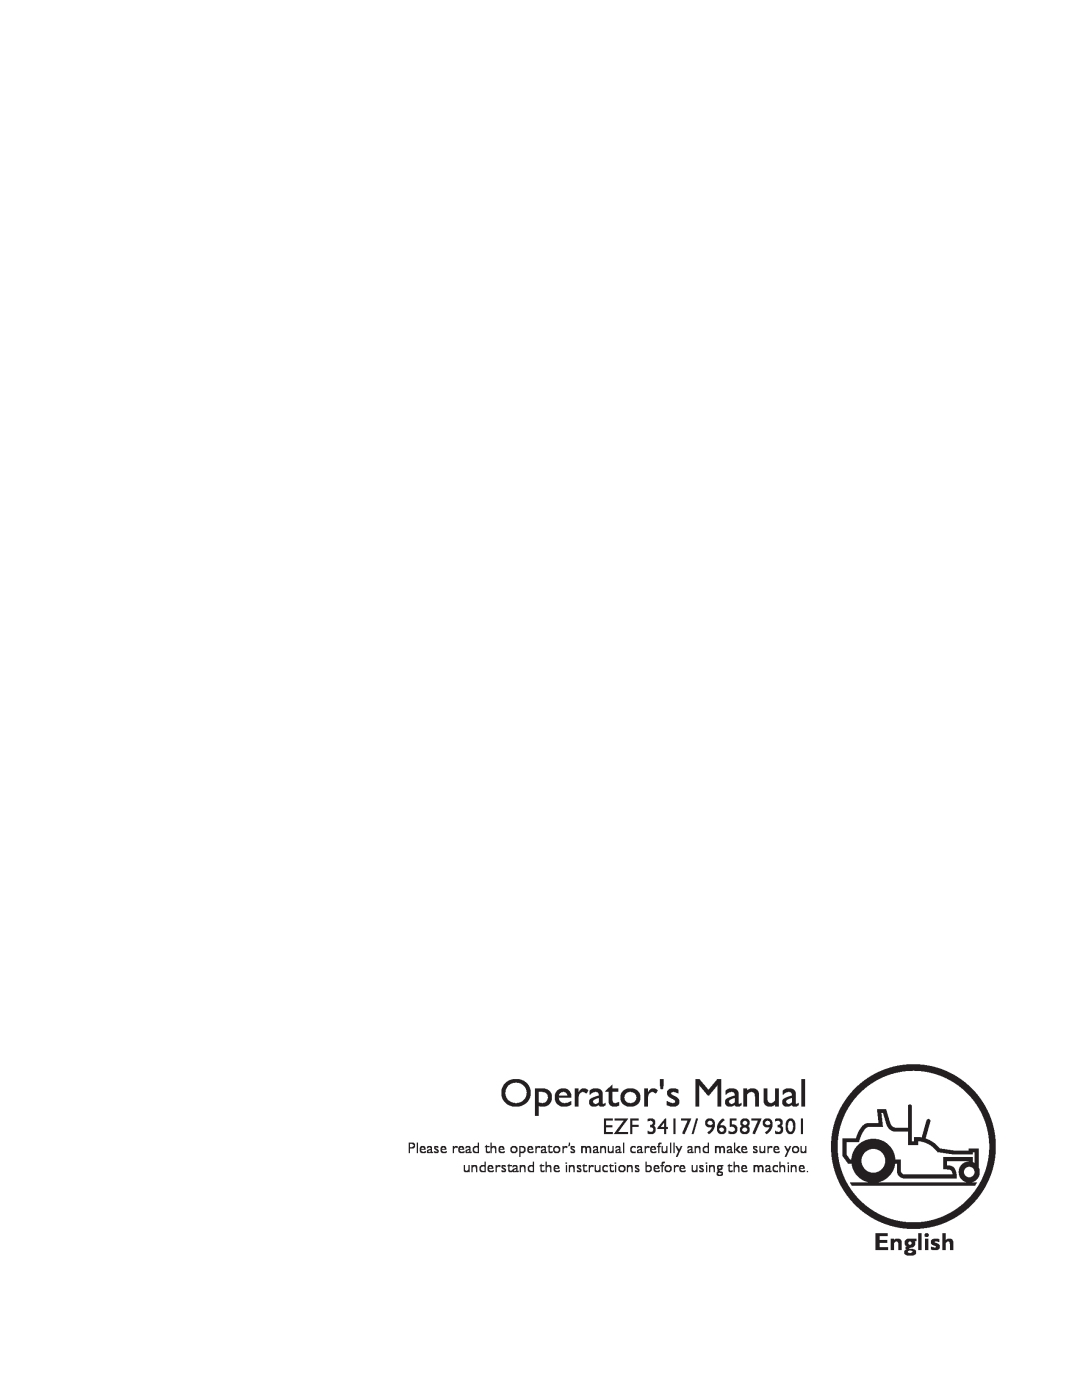 Husqvarna EZF 3417/ 965879301 manual Operators Manual, English 